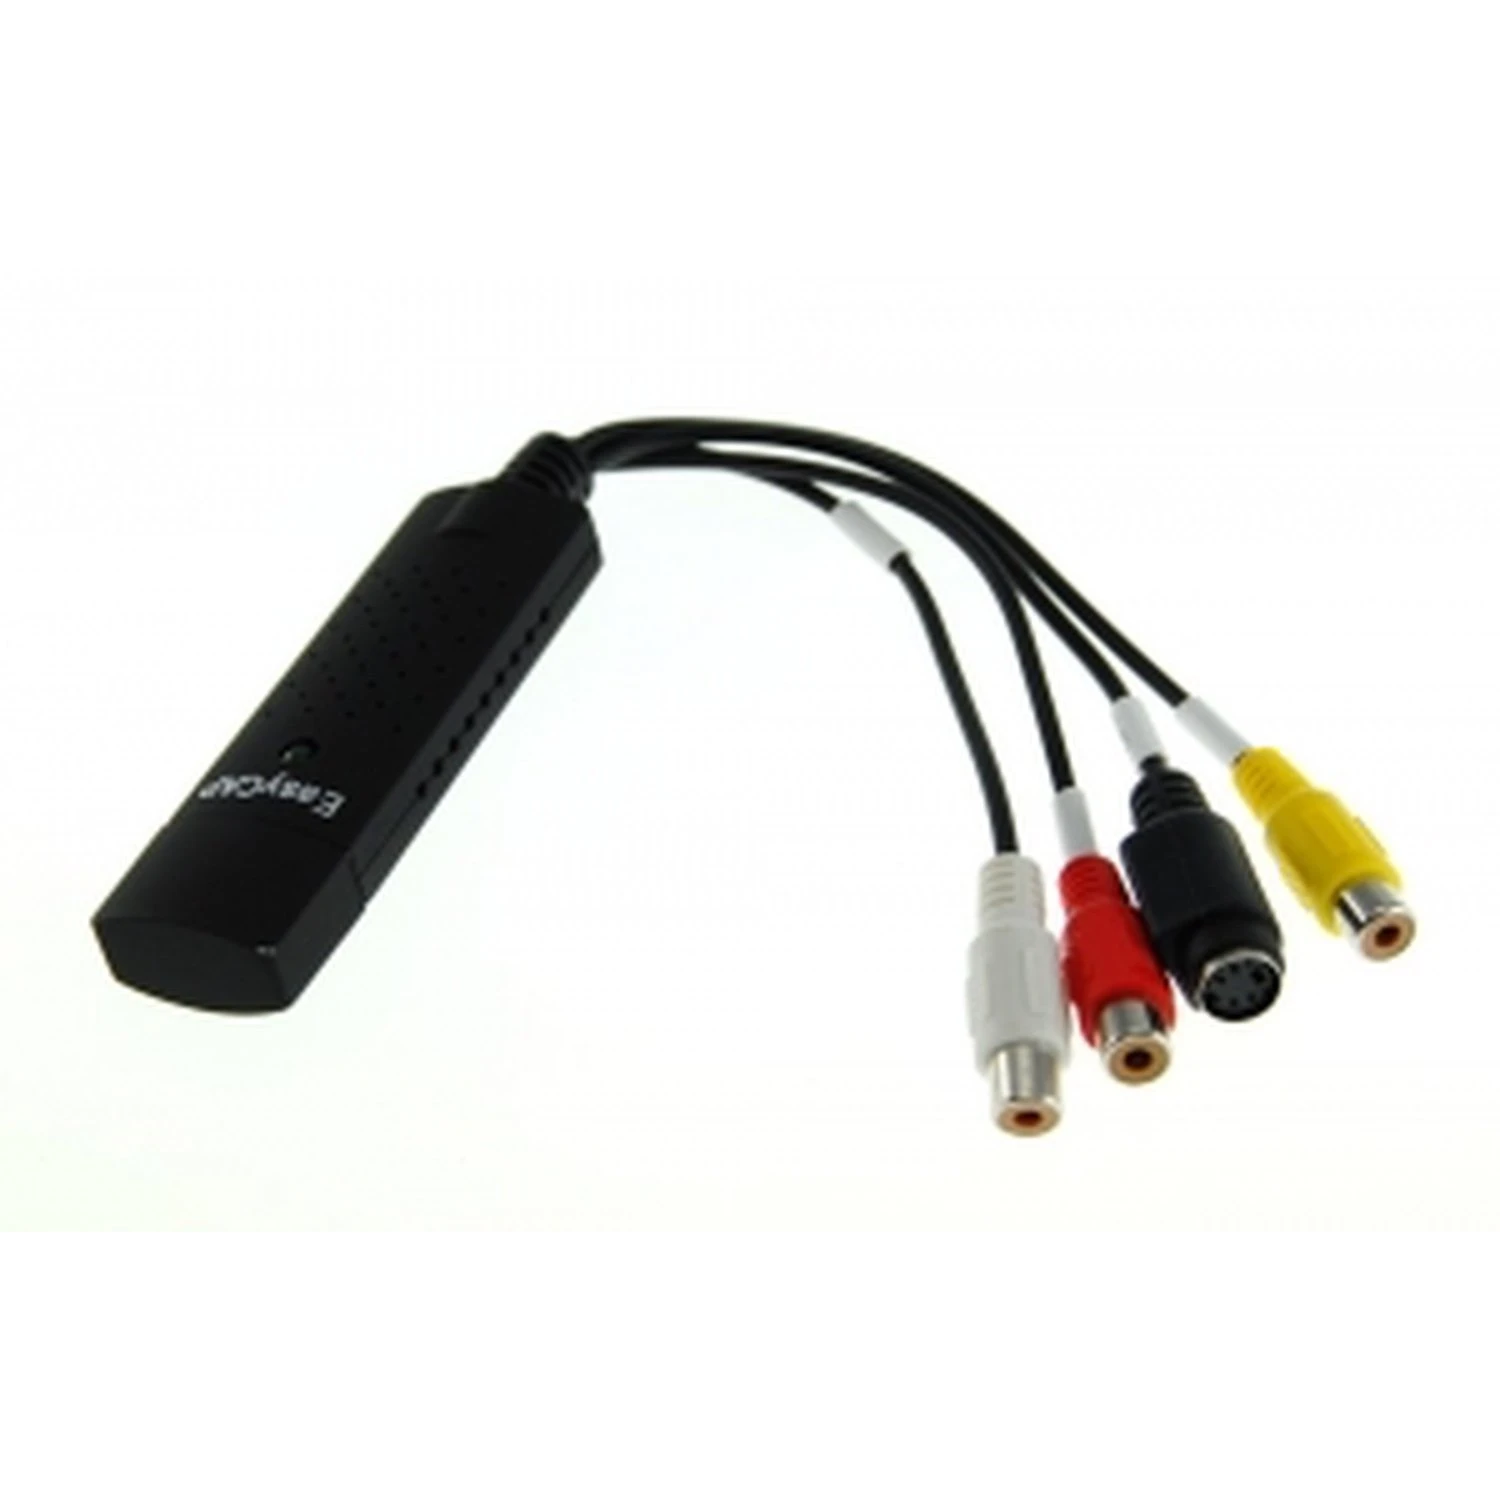 USB Video device. EASYCAP. Easy capture. USB zapal Video.